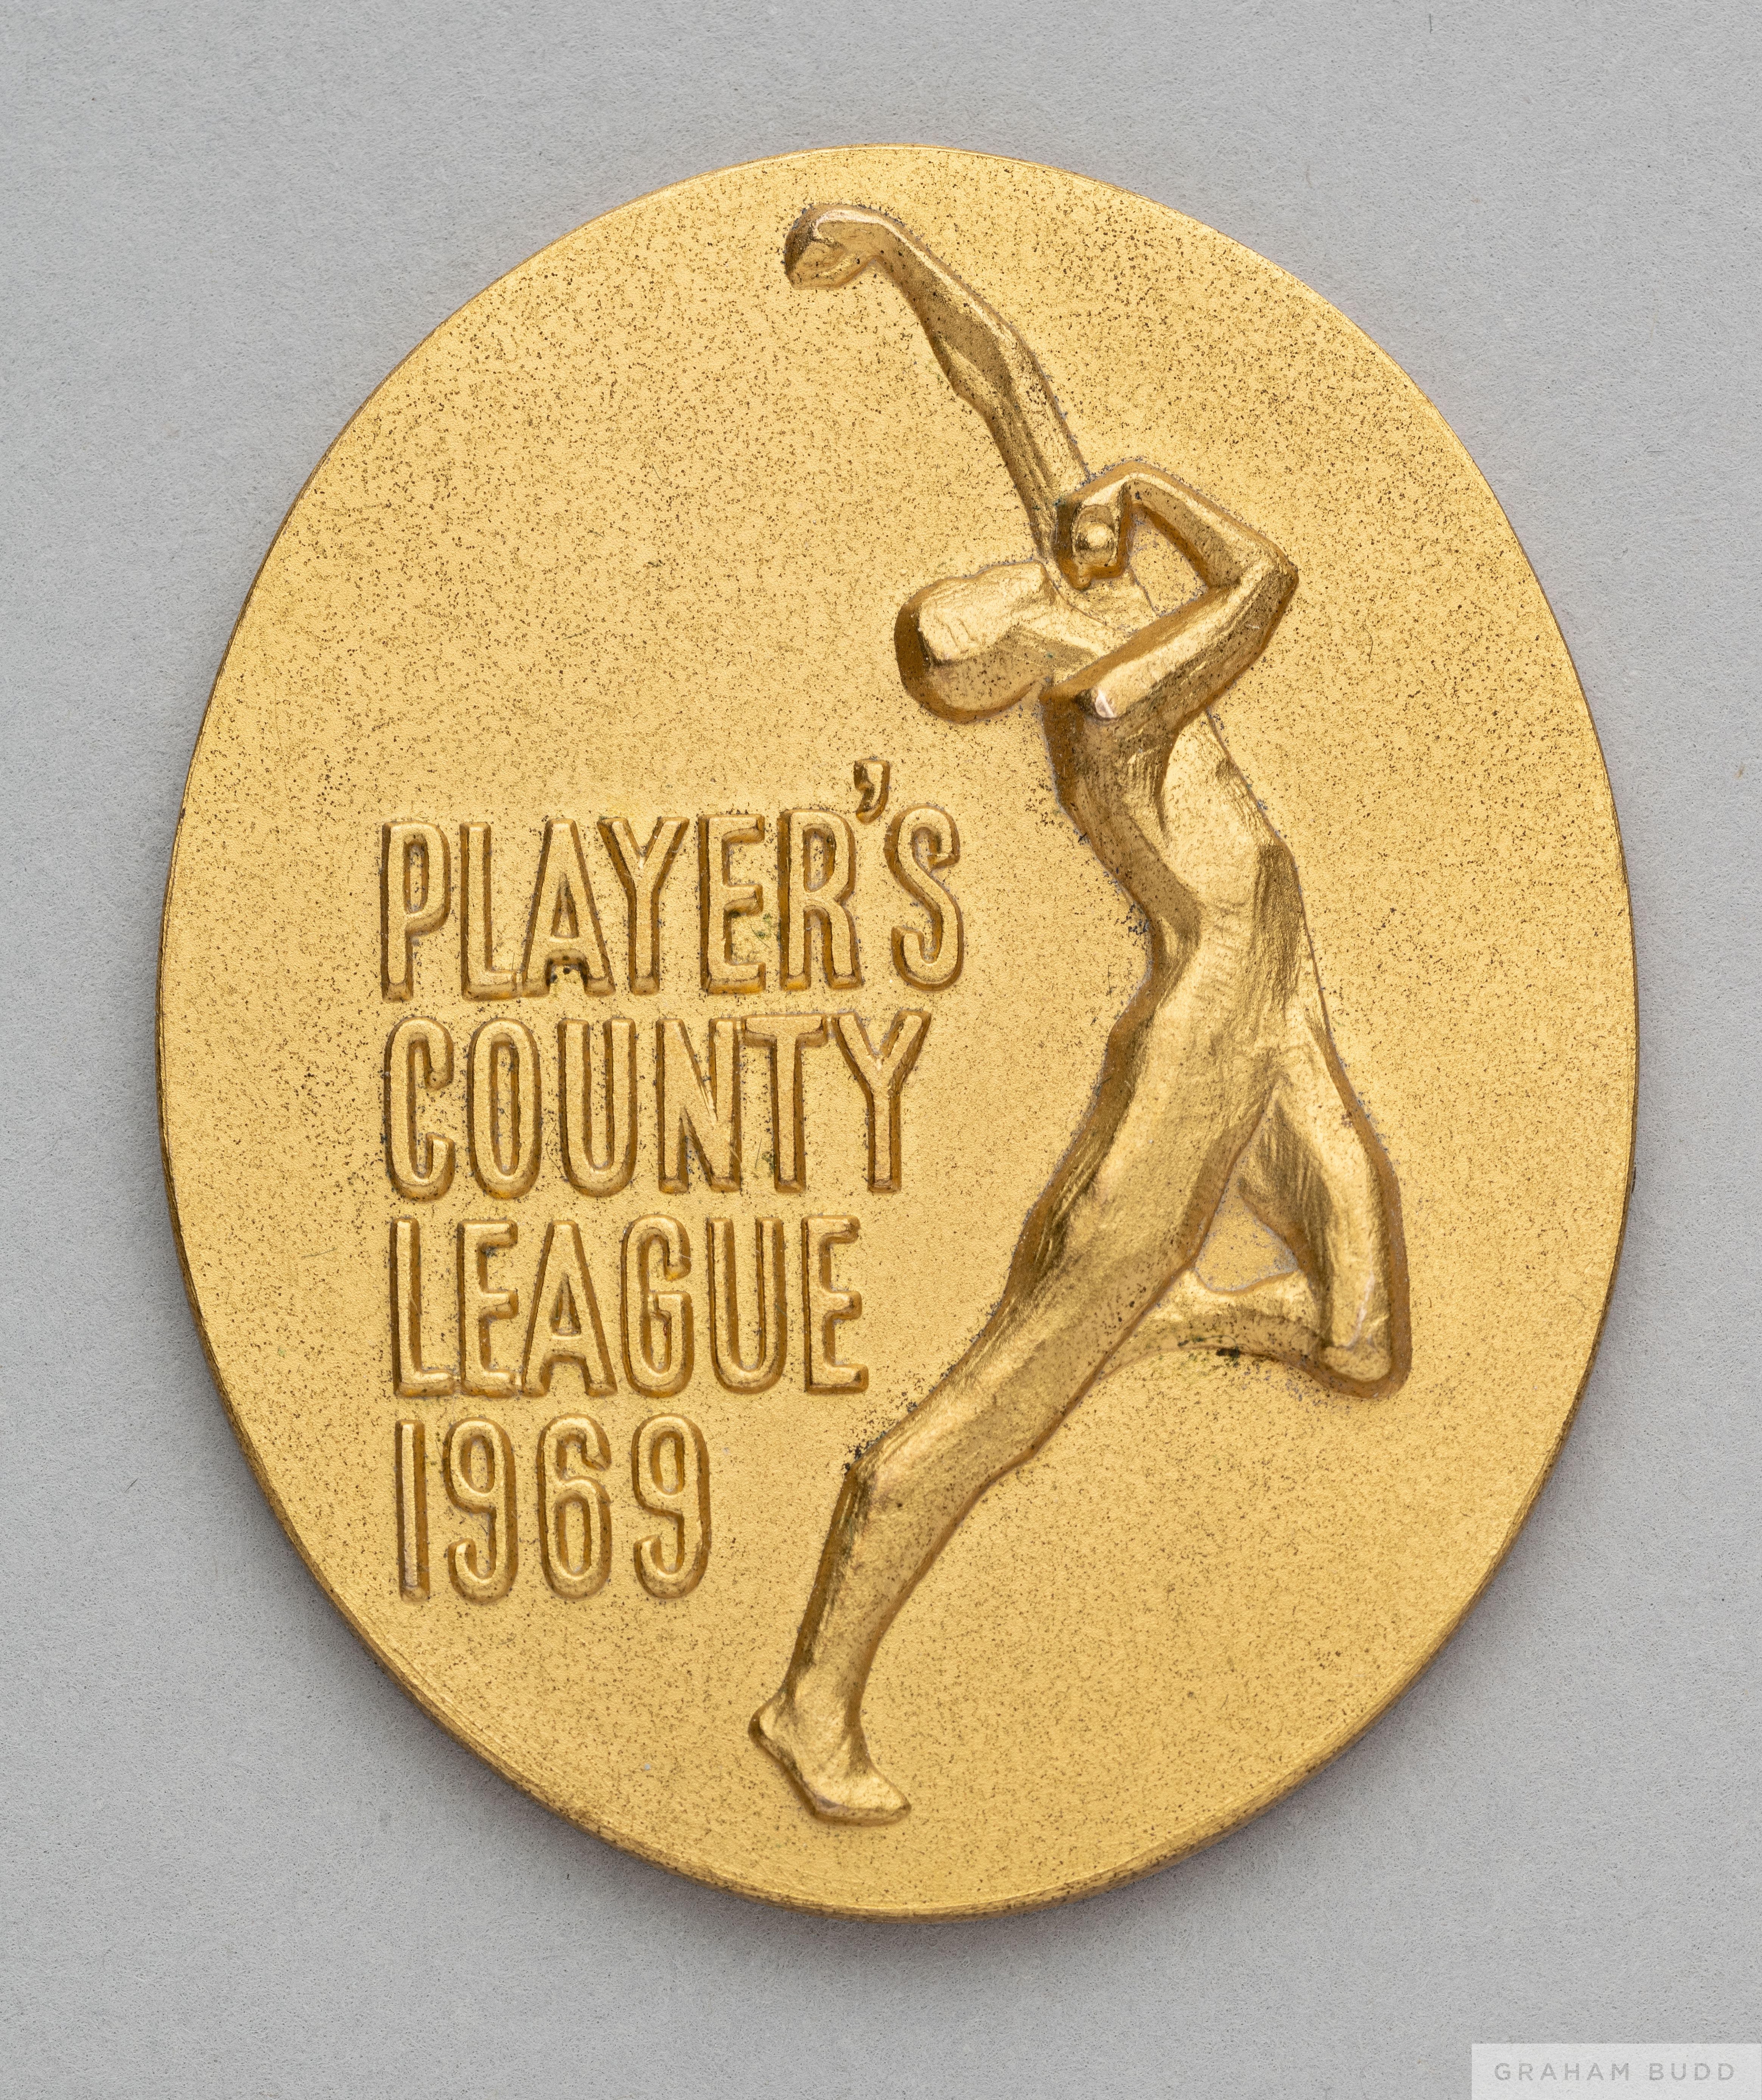 David Lloyd yellow-metal Player's County League 1969 medal